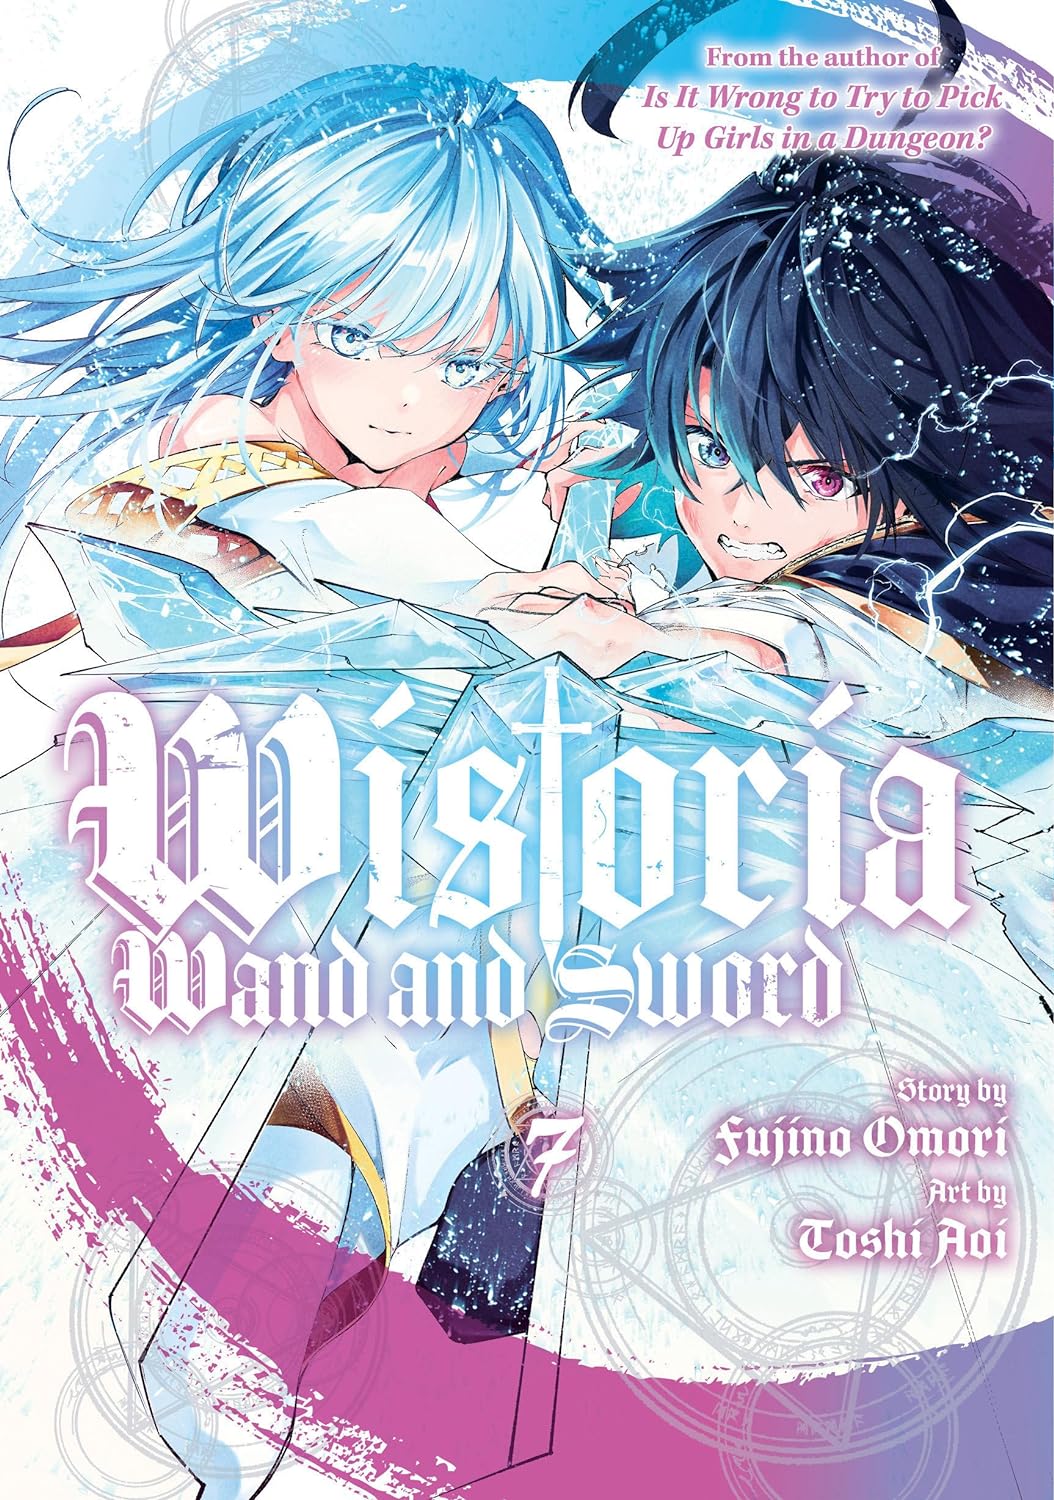 Wistoria: Wand and Sword Vol. 07